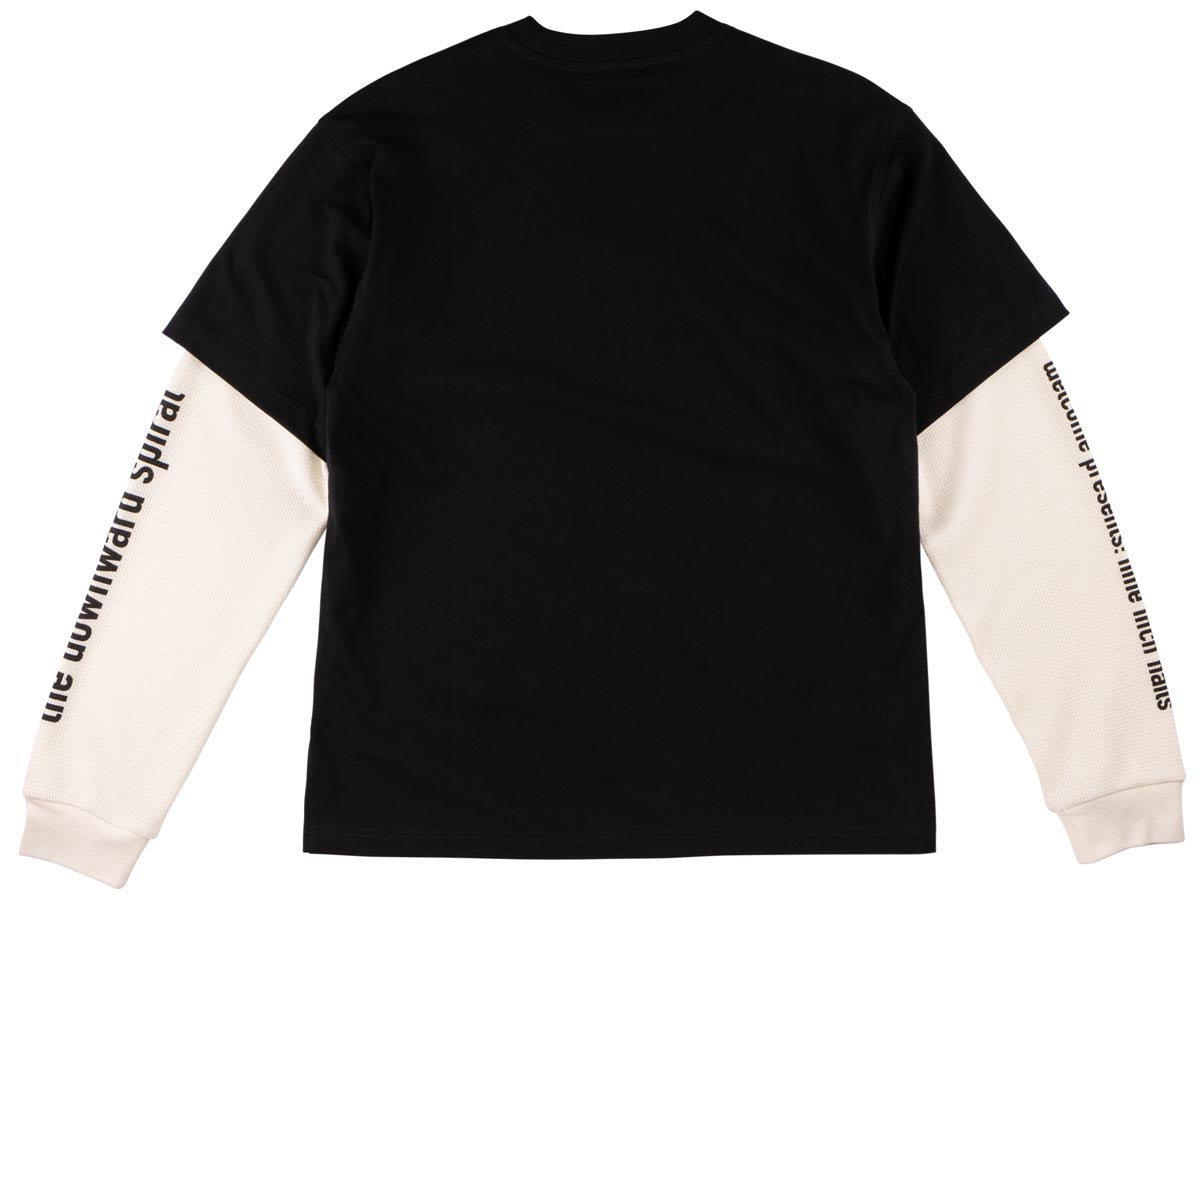 Welcome x Nine Inch Nails Heresy Layered Knit Shirt - Black/Bone image 2